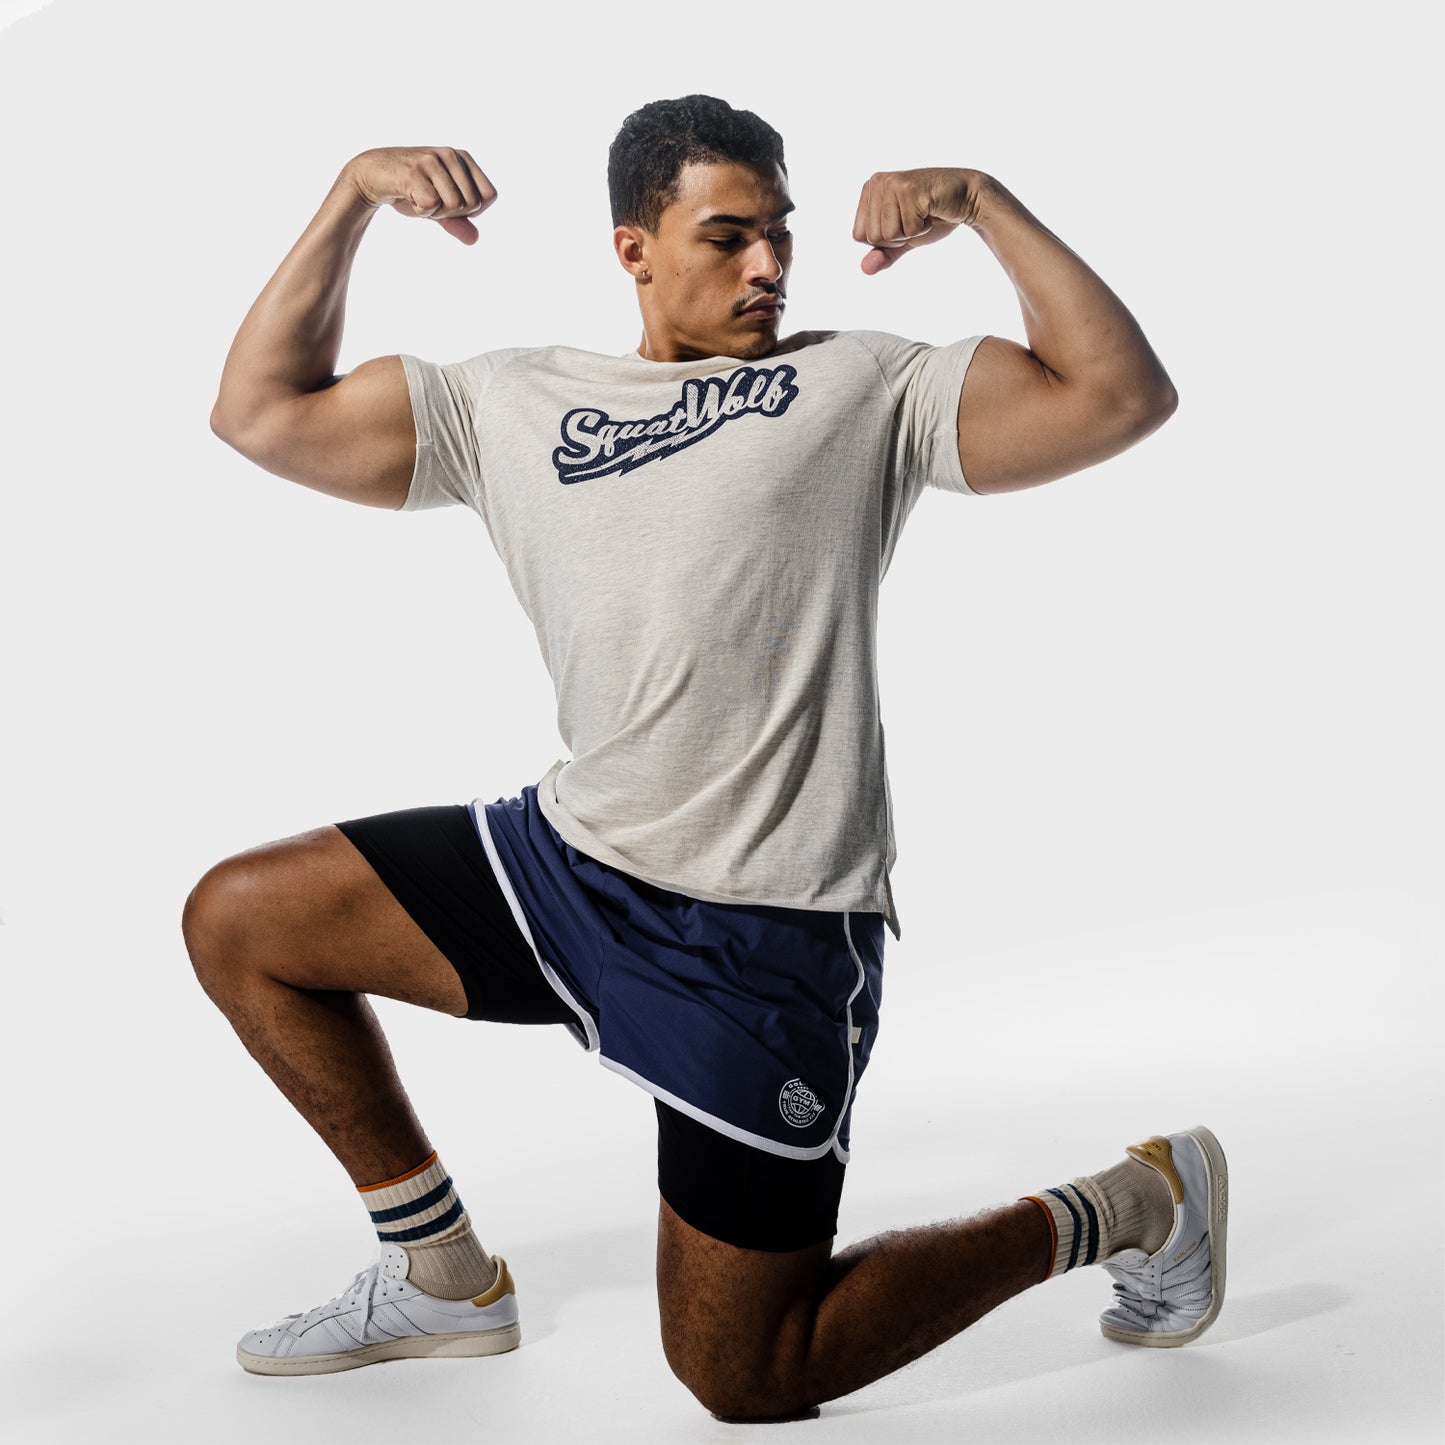 squatwolf-gym-t-shirts-golden-era-one-up-t-shirt-ecru-marl-workout-clothes-for-men